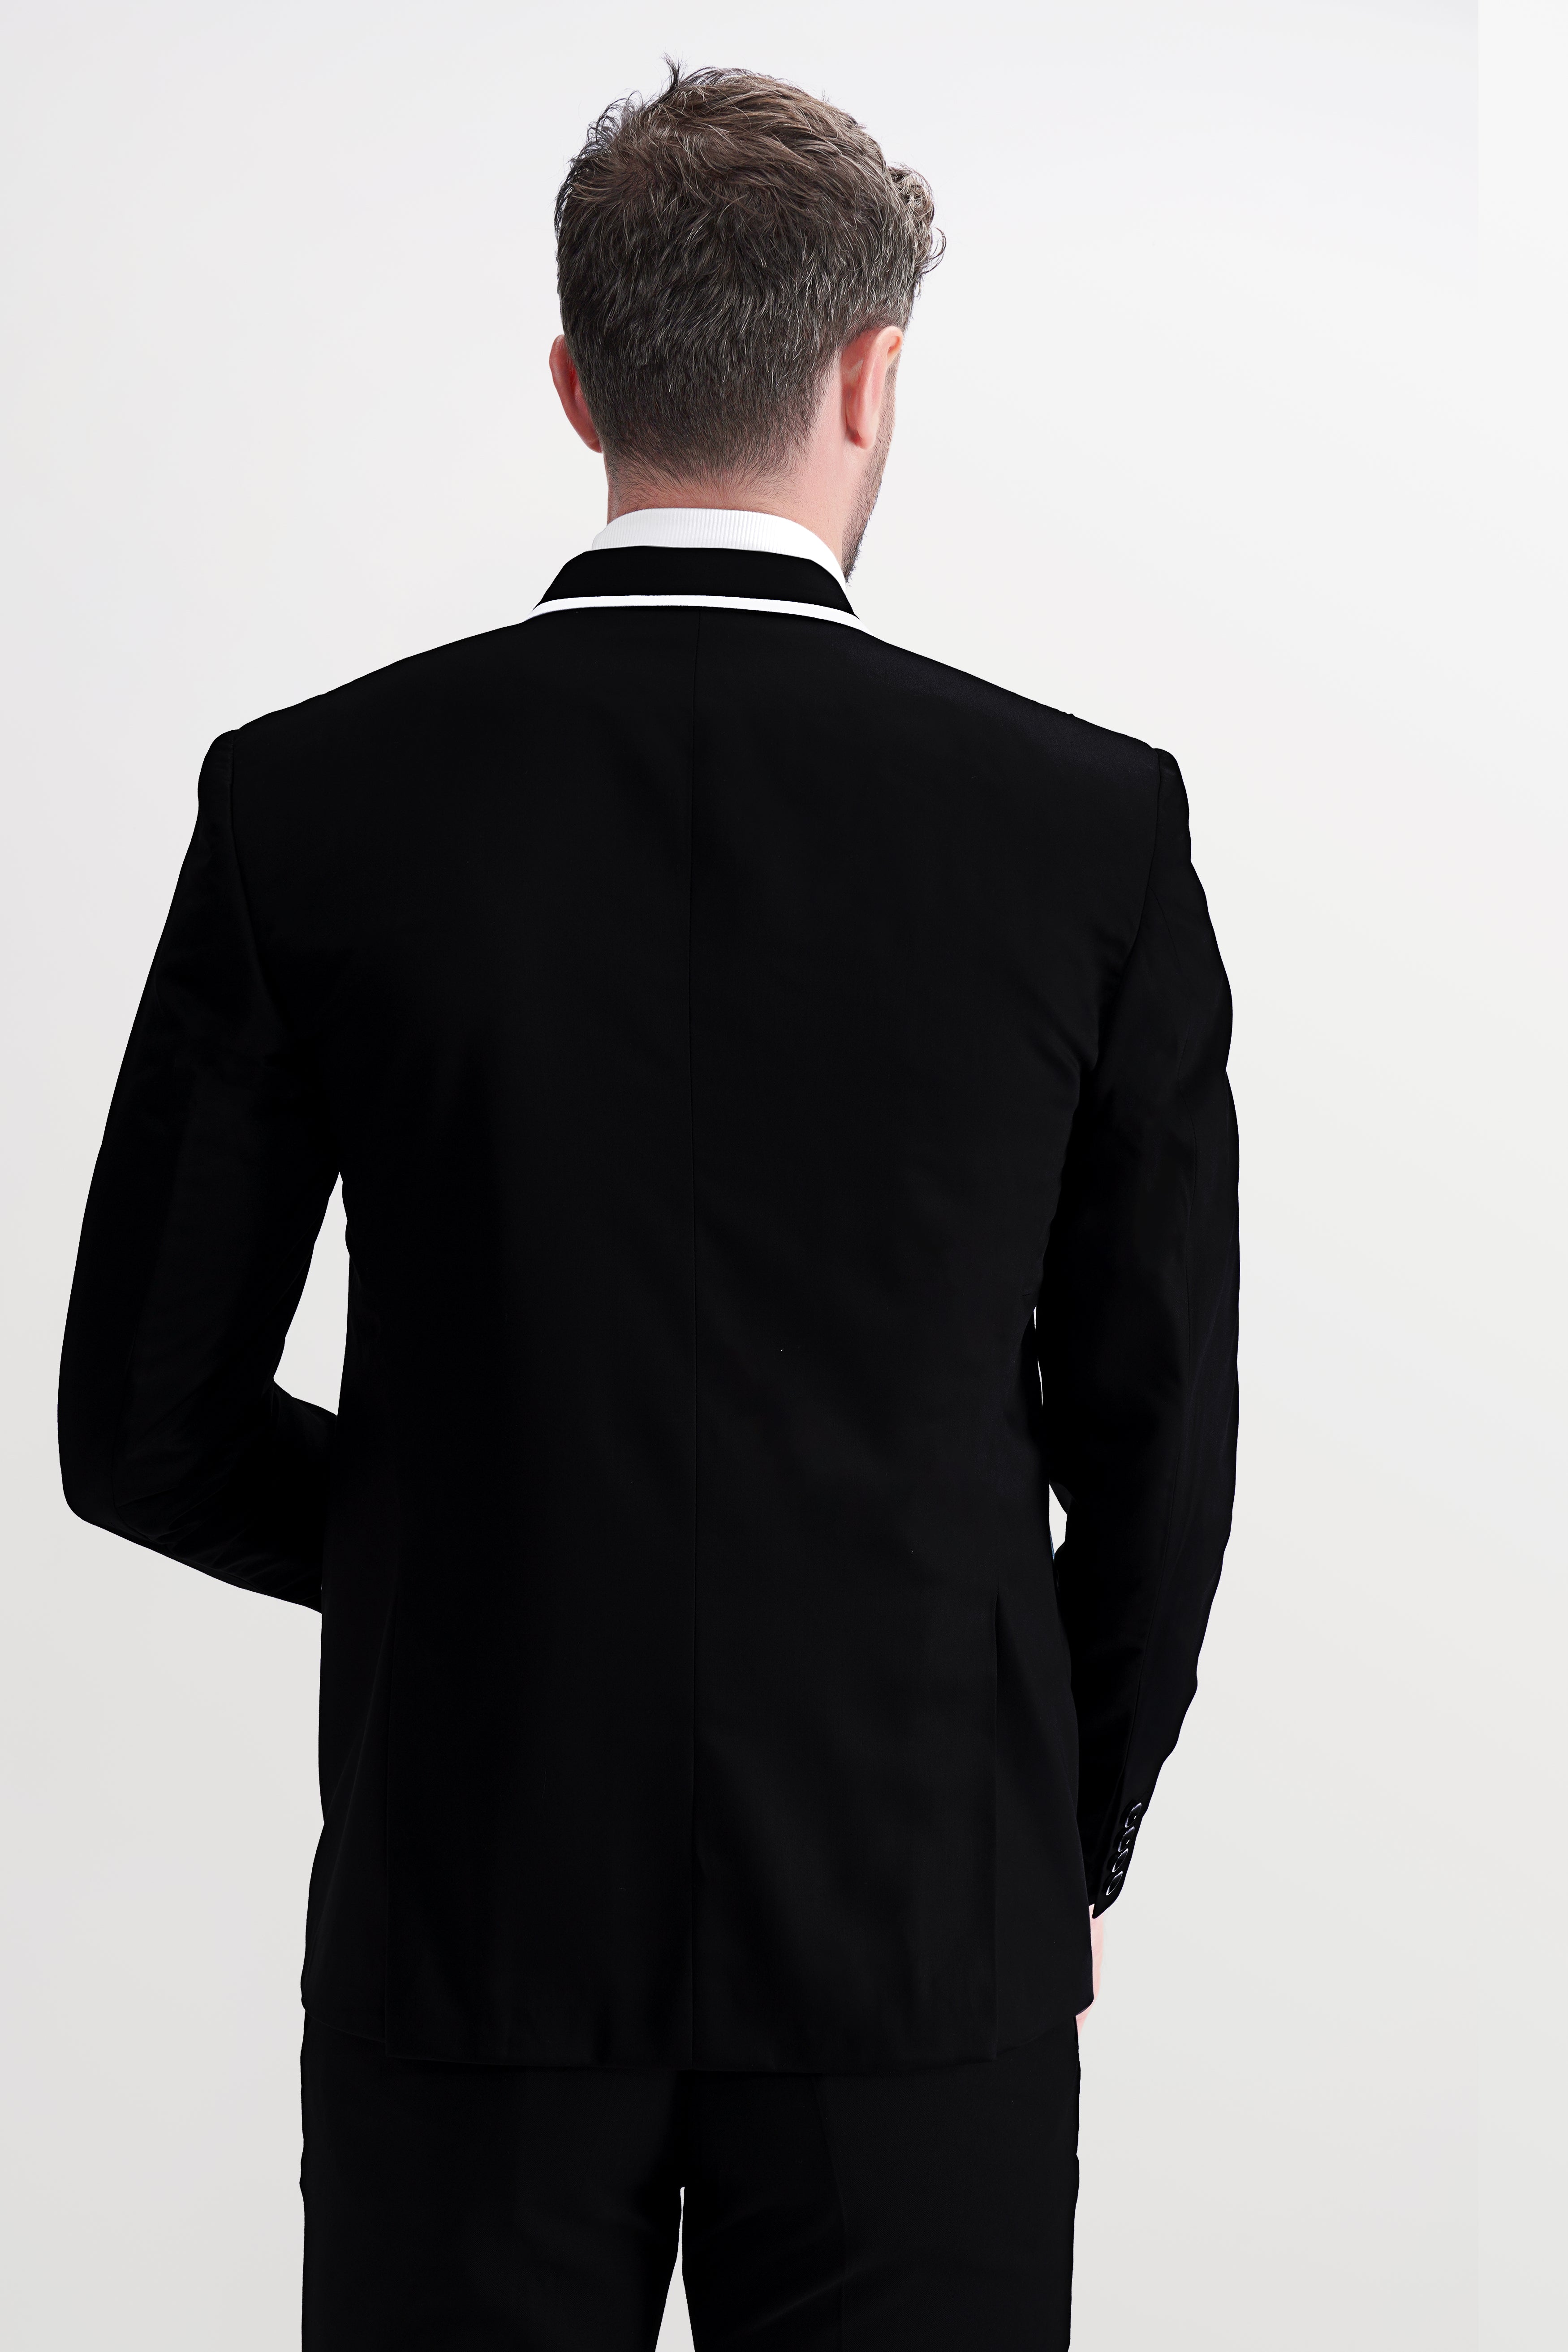 Jade Black Subtle Sheen with White Border Patterned Suit